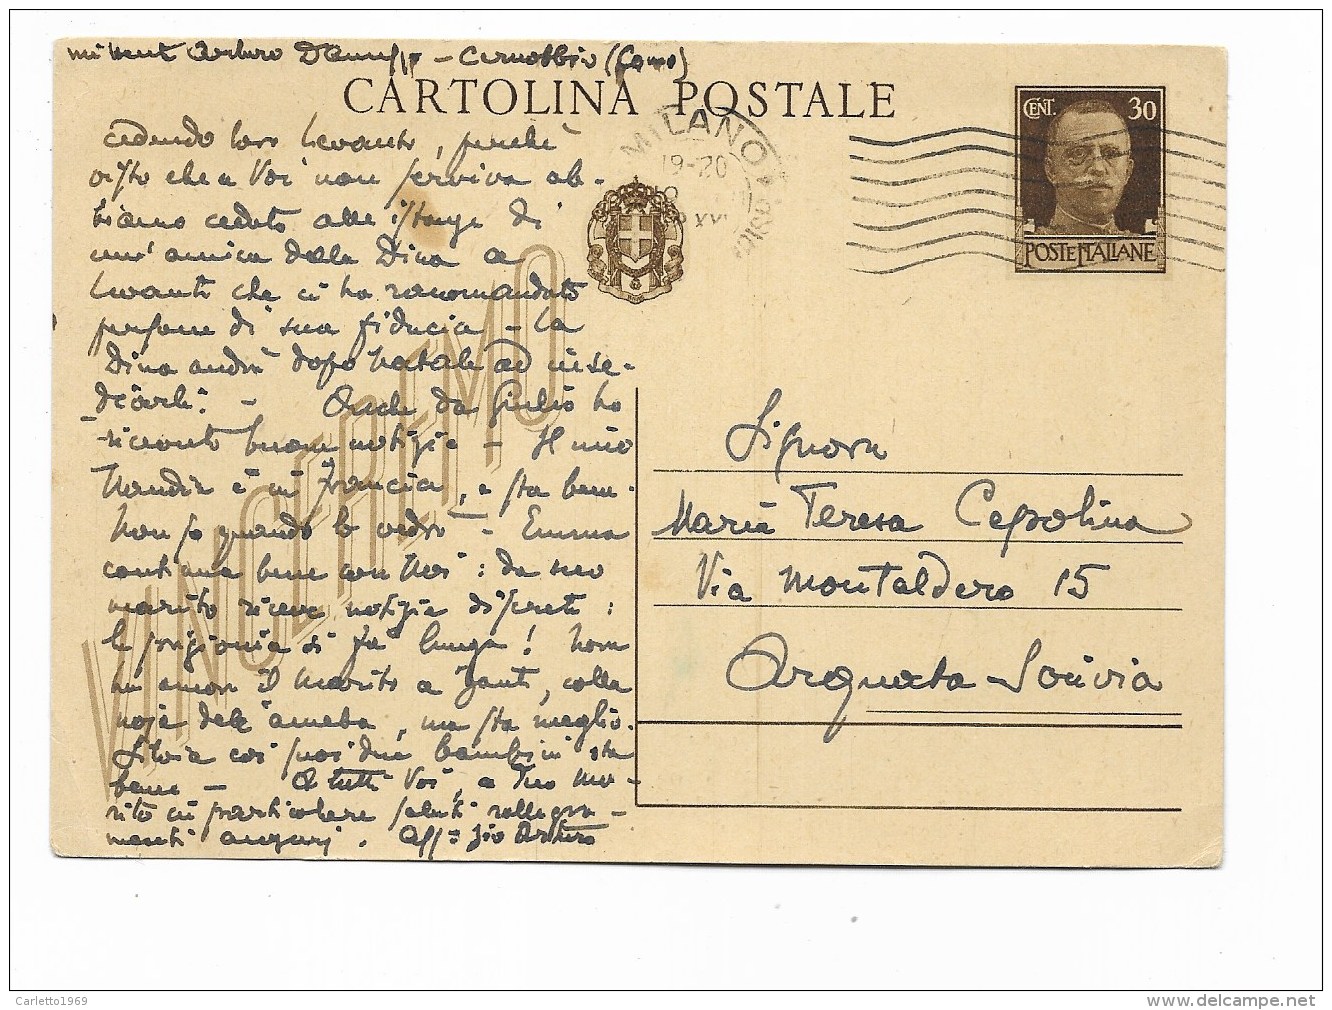 CARTOLINA POSTALE  TIMBRO MILANO COMO 1942  - VIAGGIATA FG - Historia